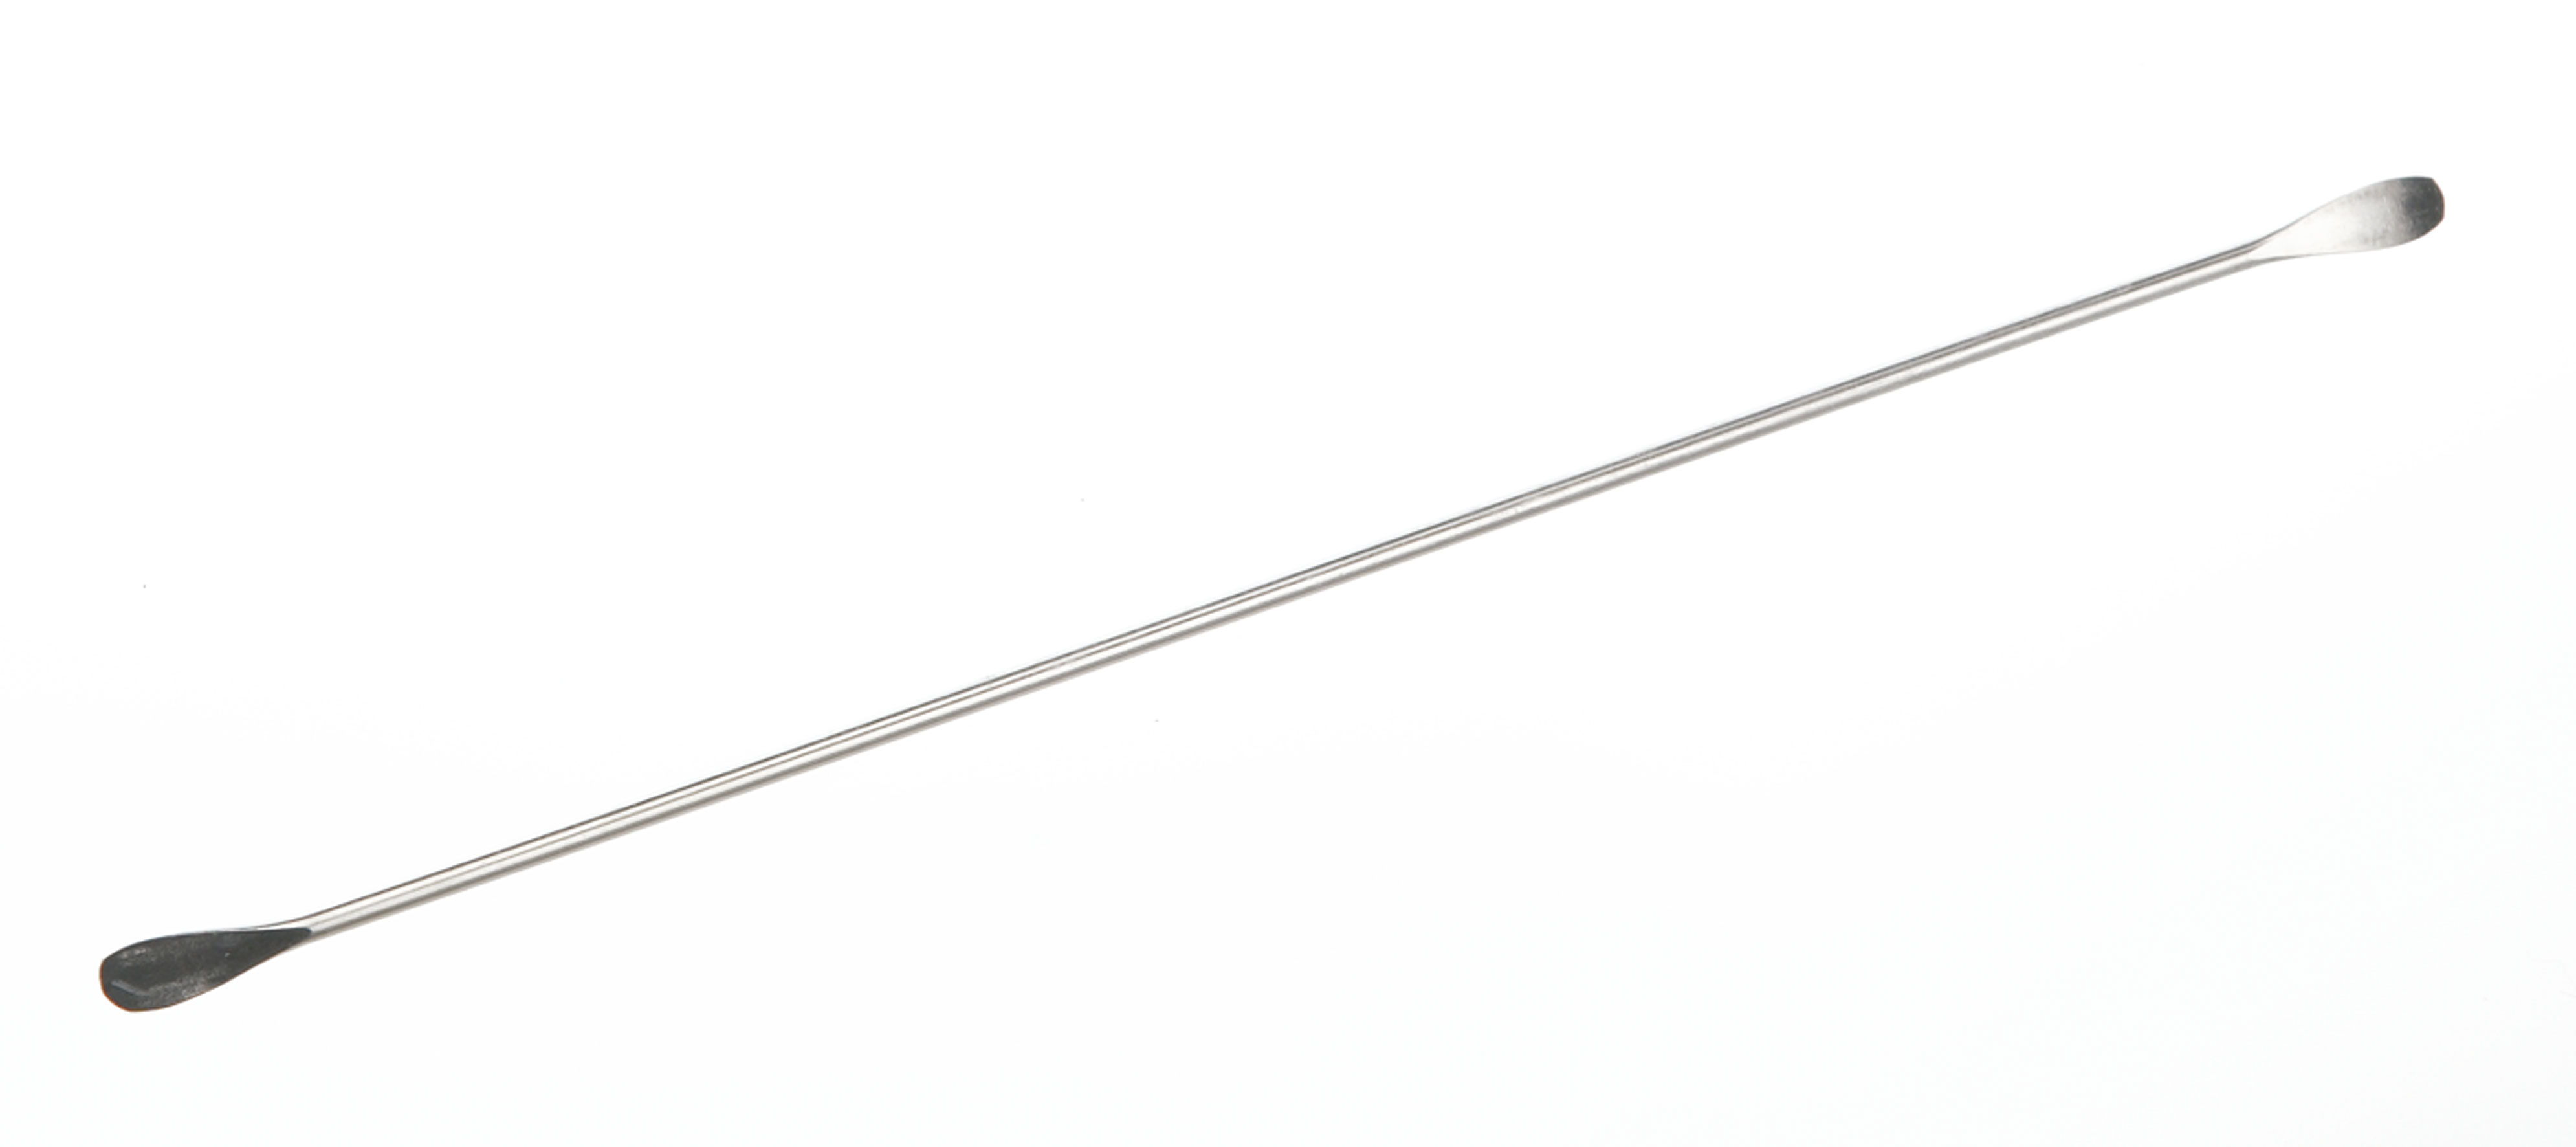 Espátula doble, en forma de cuchara. Longitud/Ancho (mm): 5x130